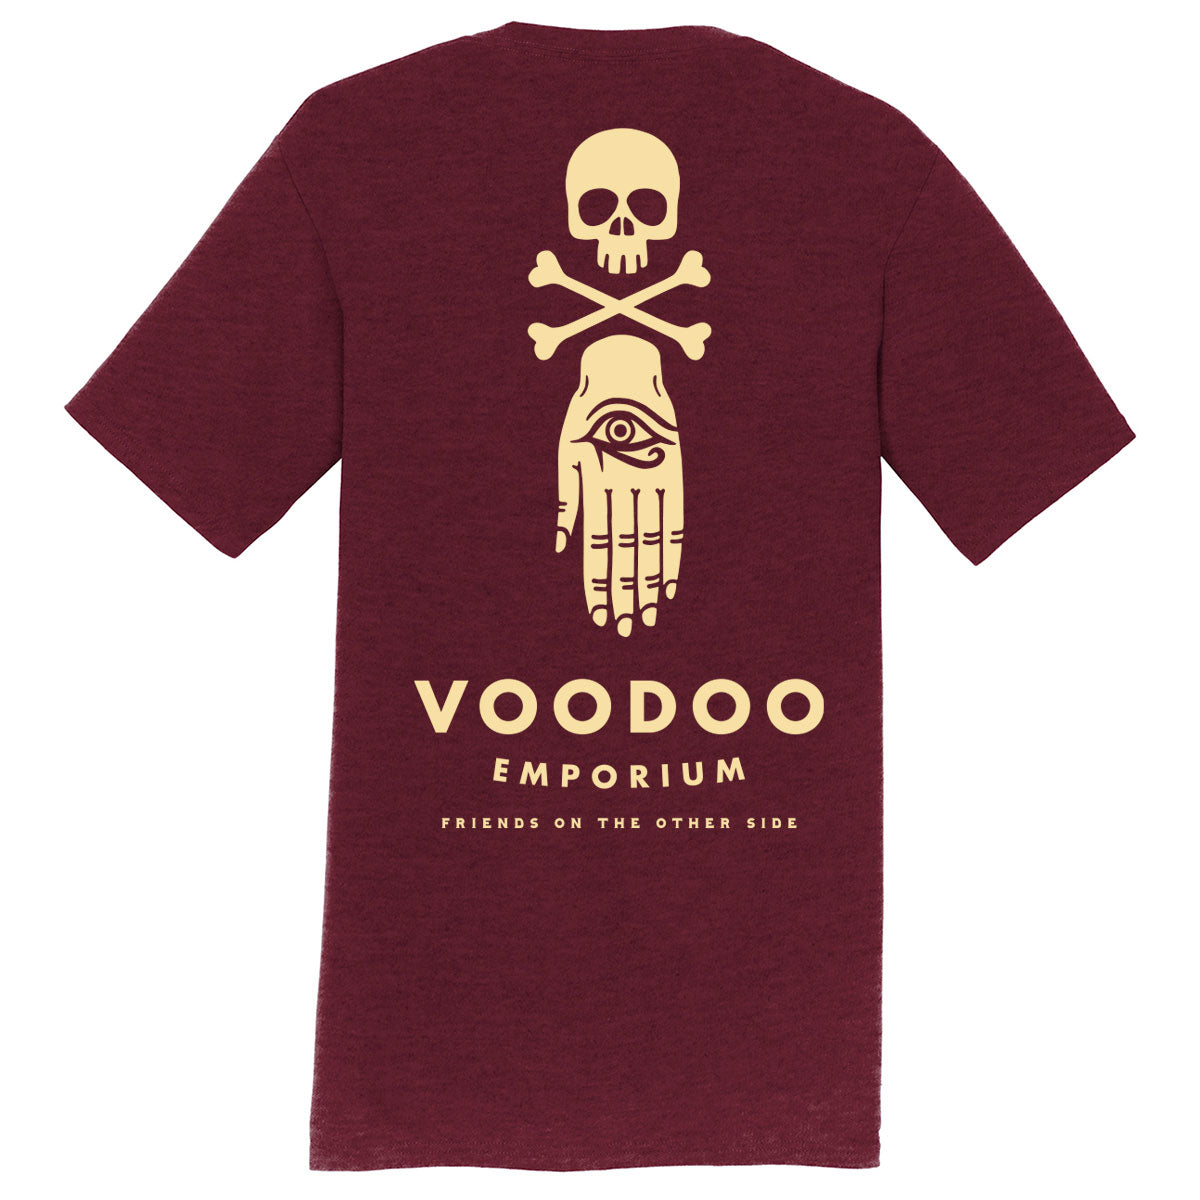 Voodoo Emporium Tee - Whosits & Whatsits